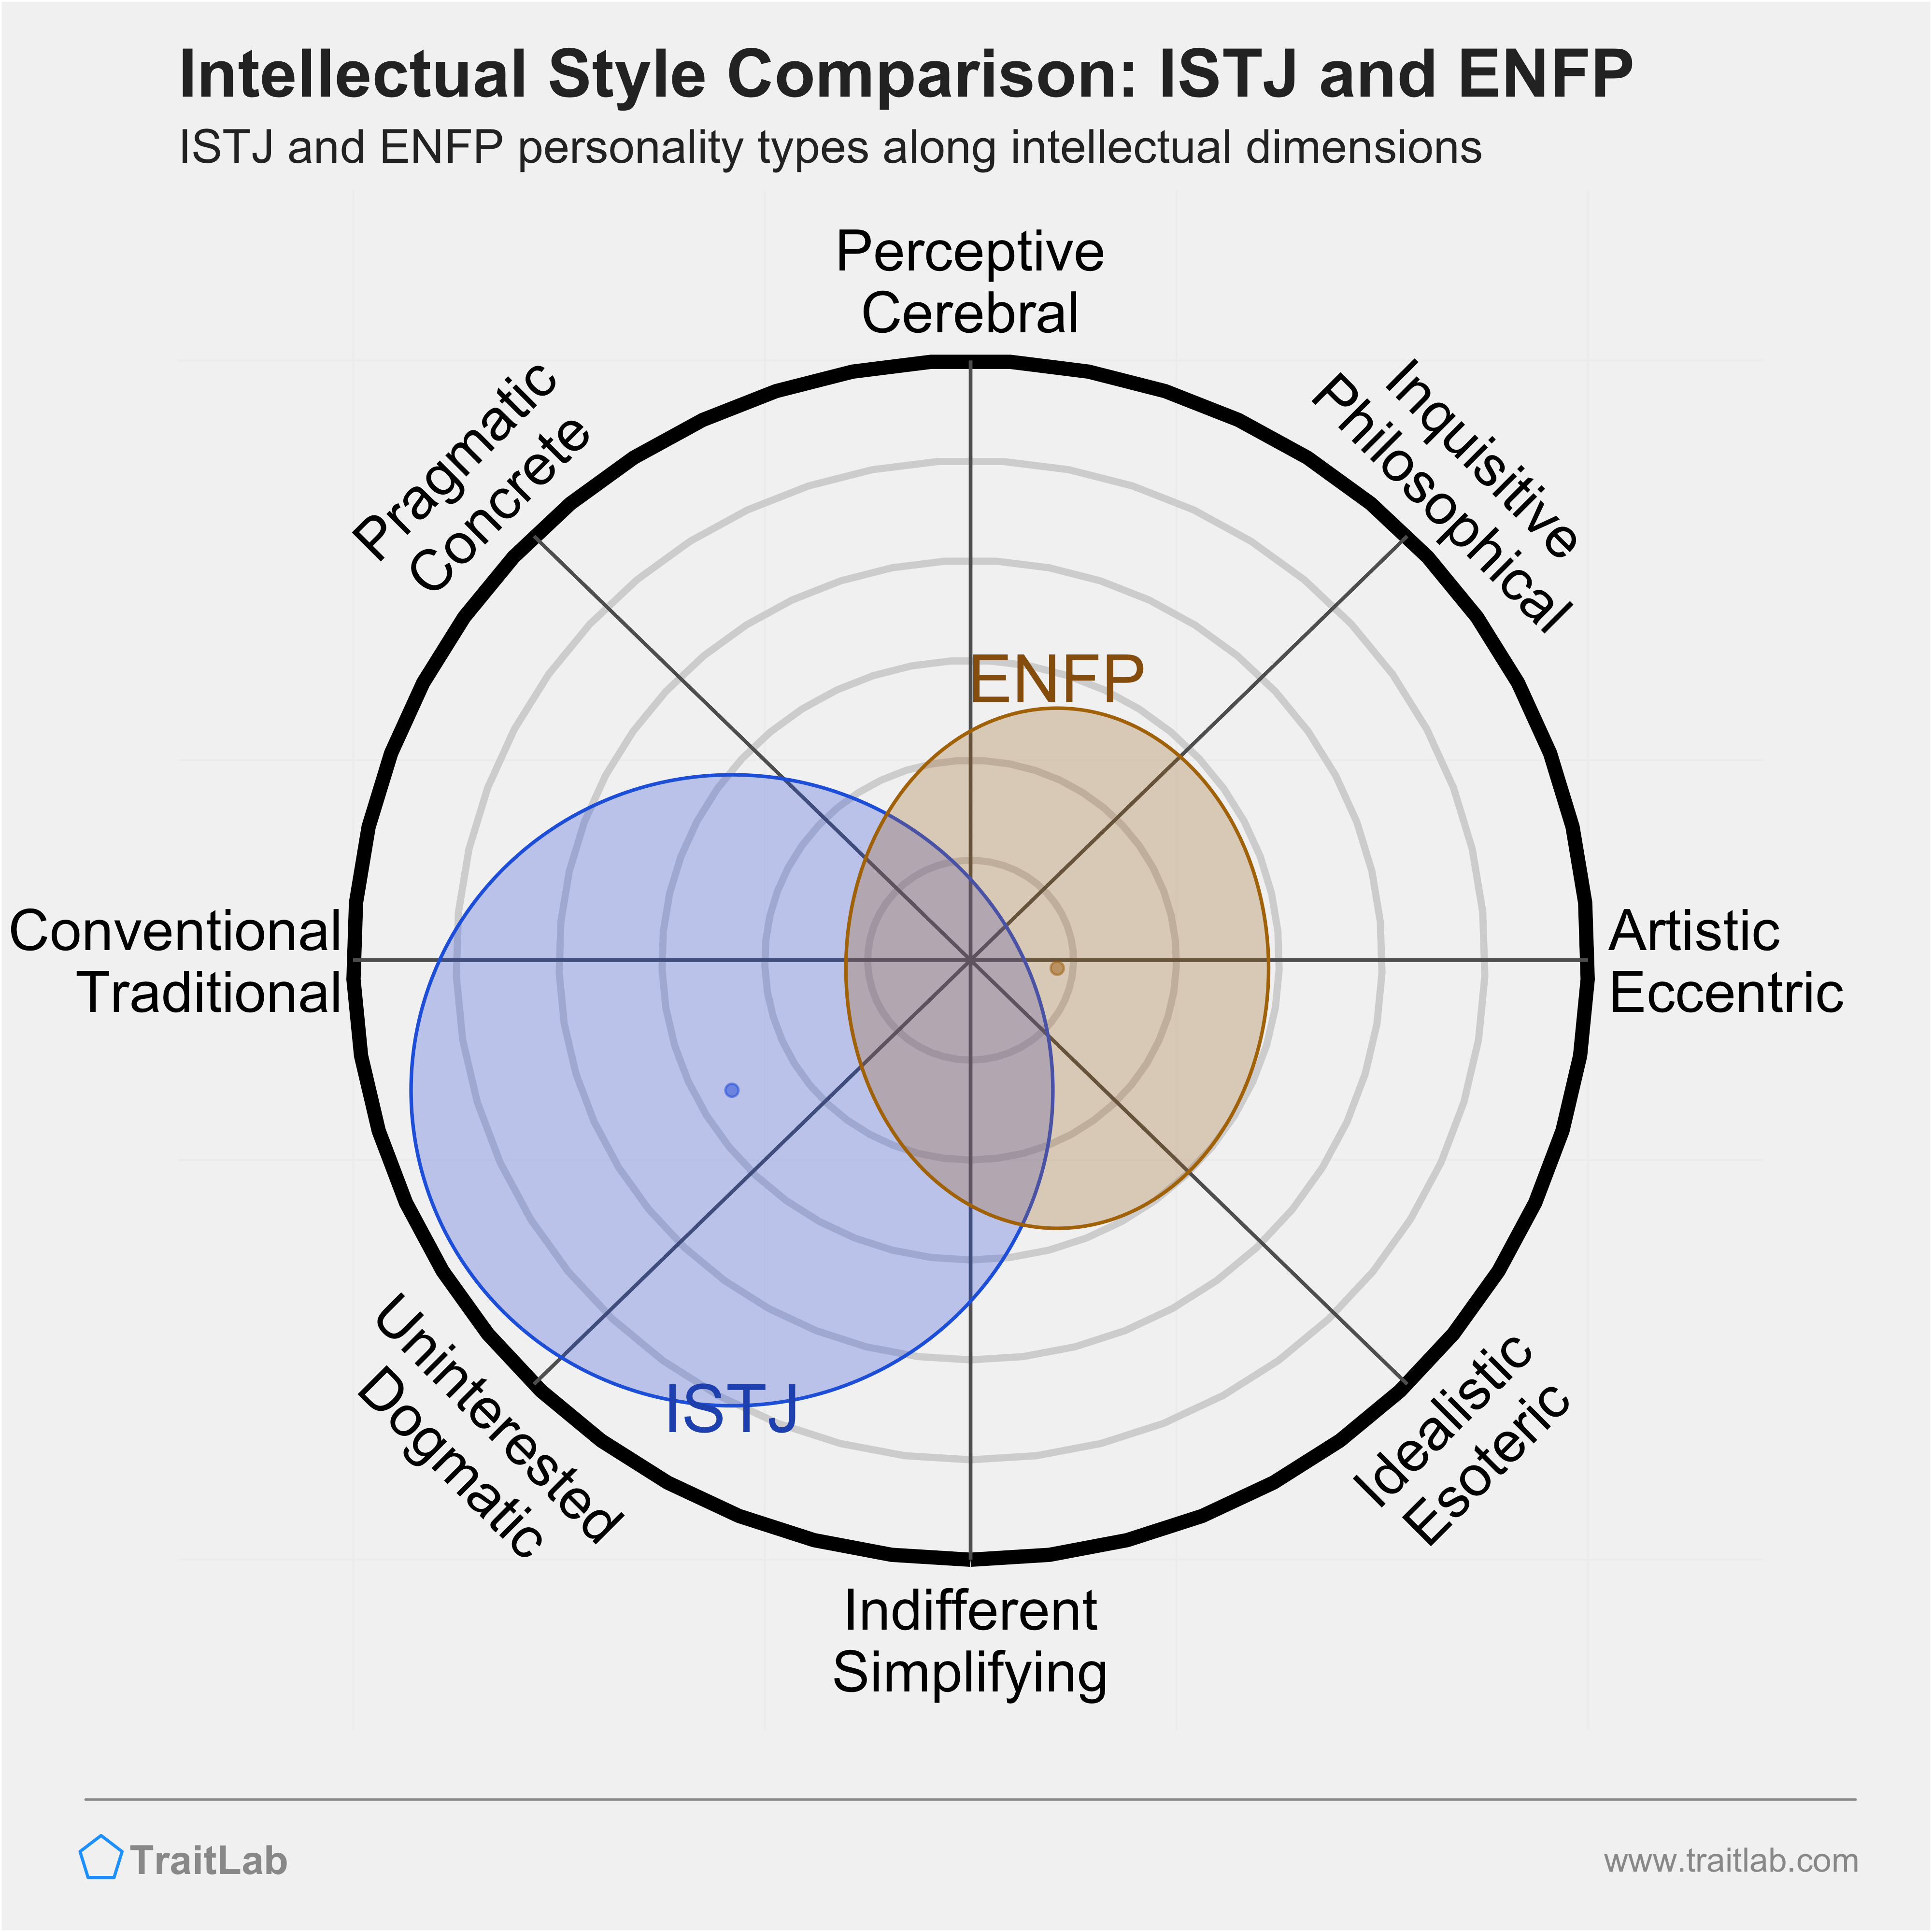 ISTJ and ENFP comparison across intellectual dimensions